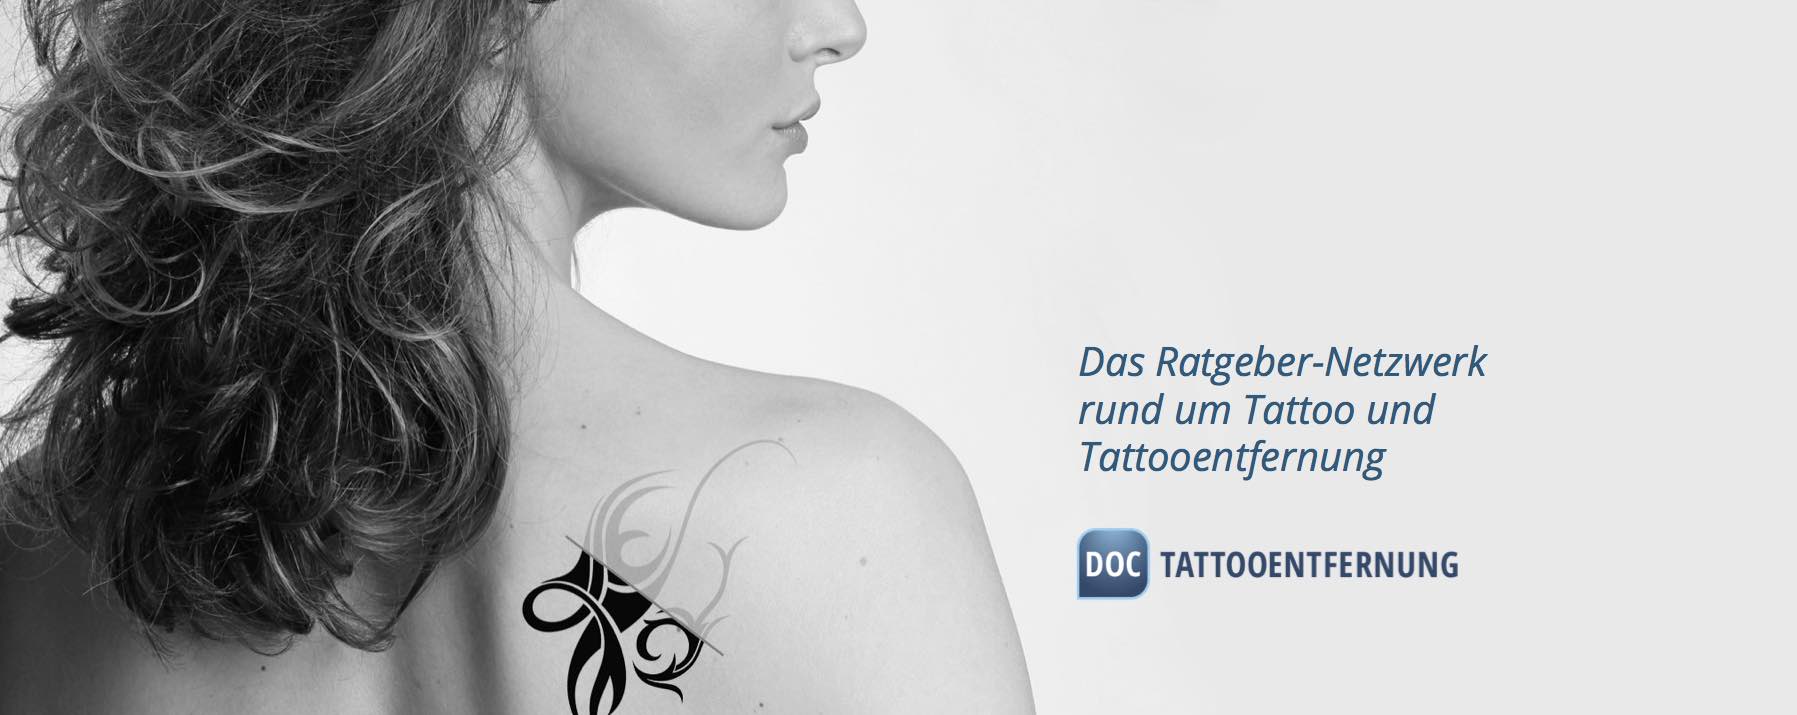 (c) Doc-tattooentfernung.com